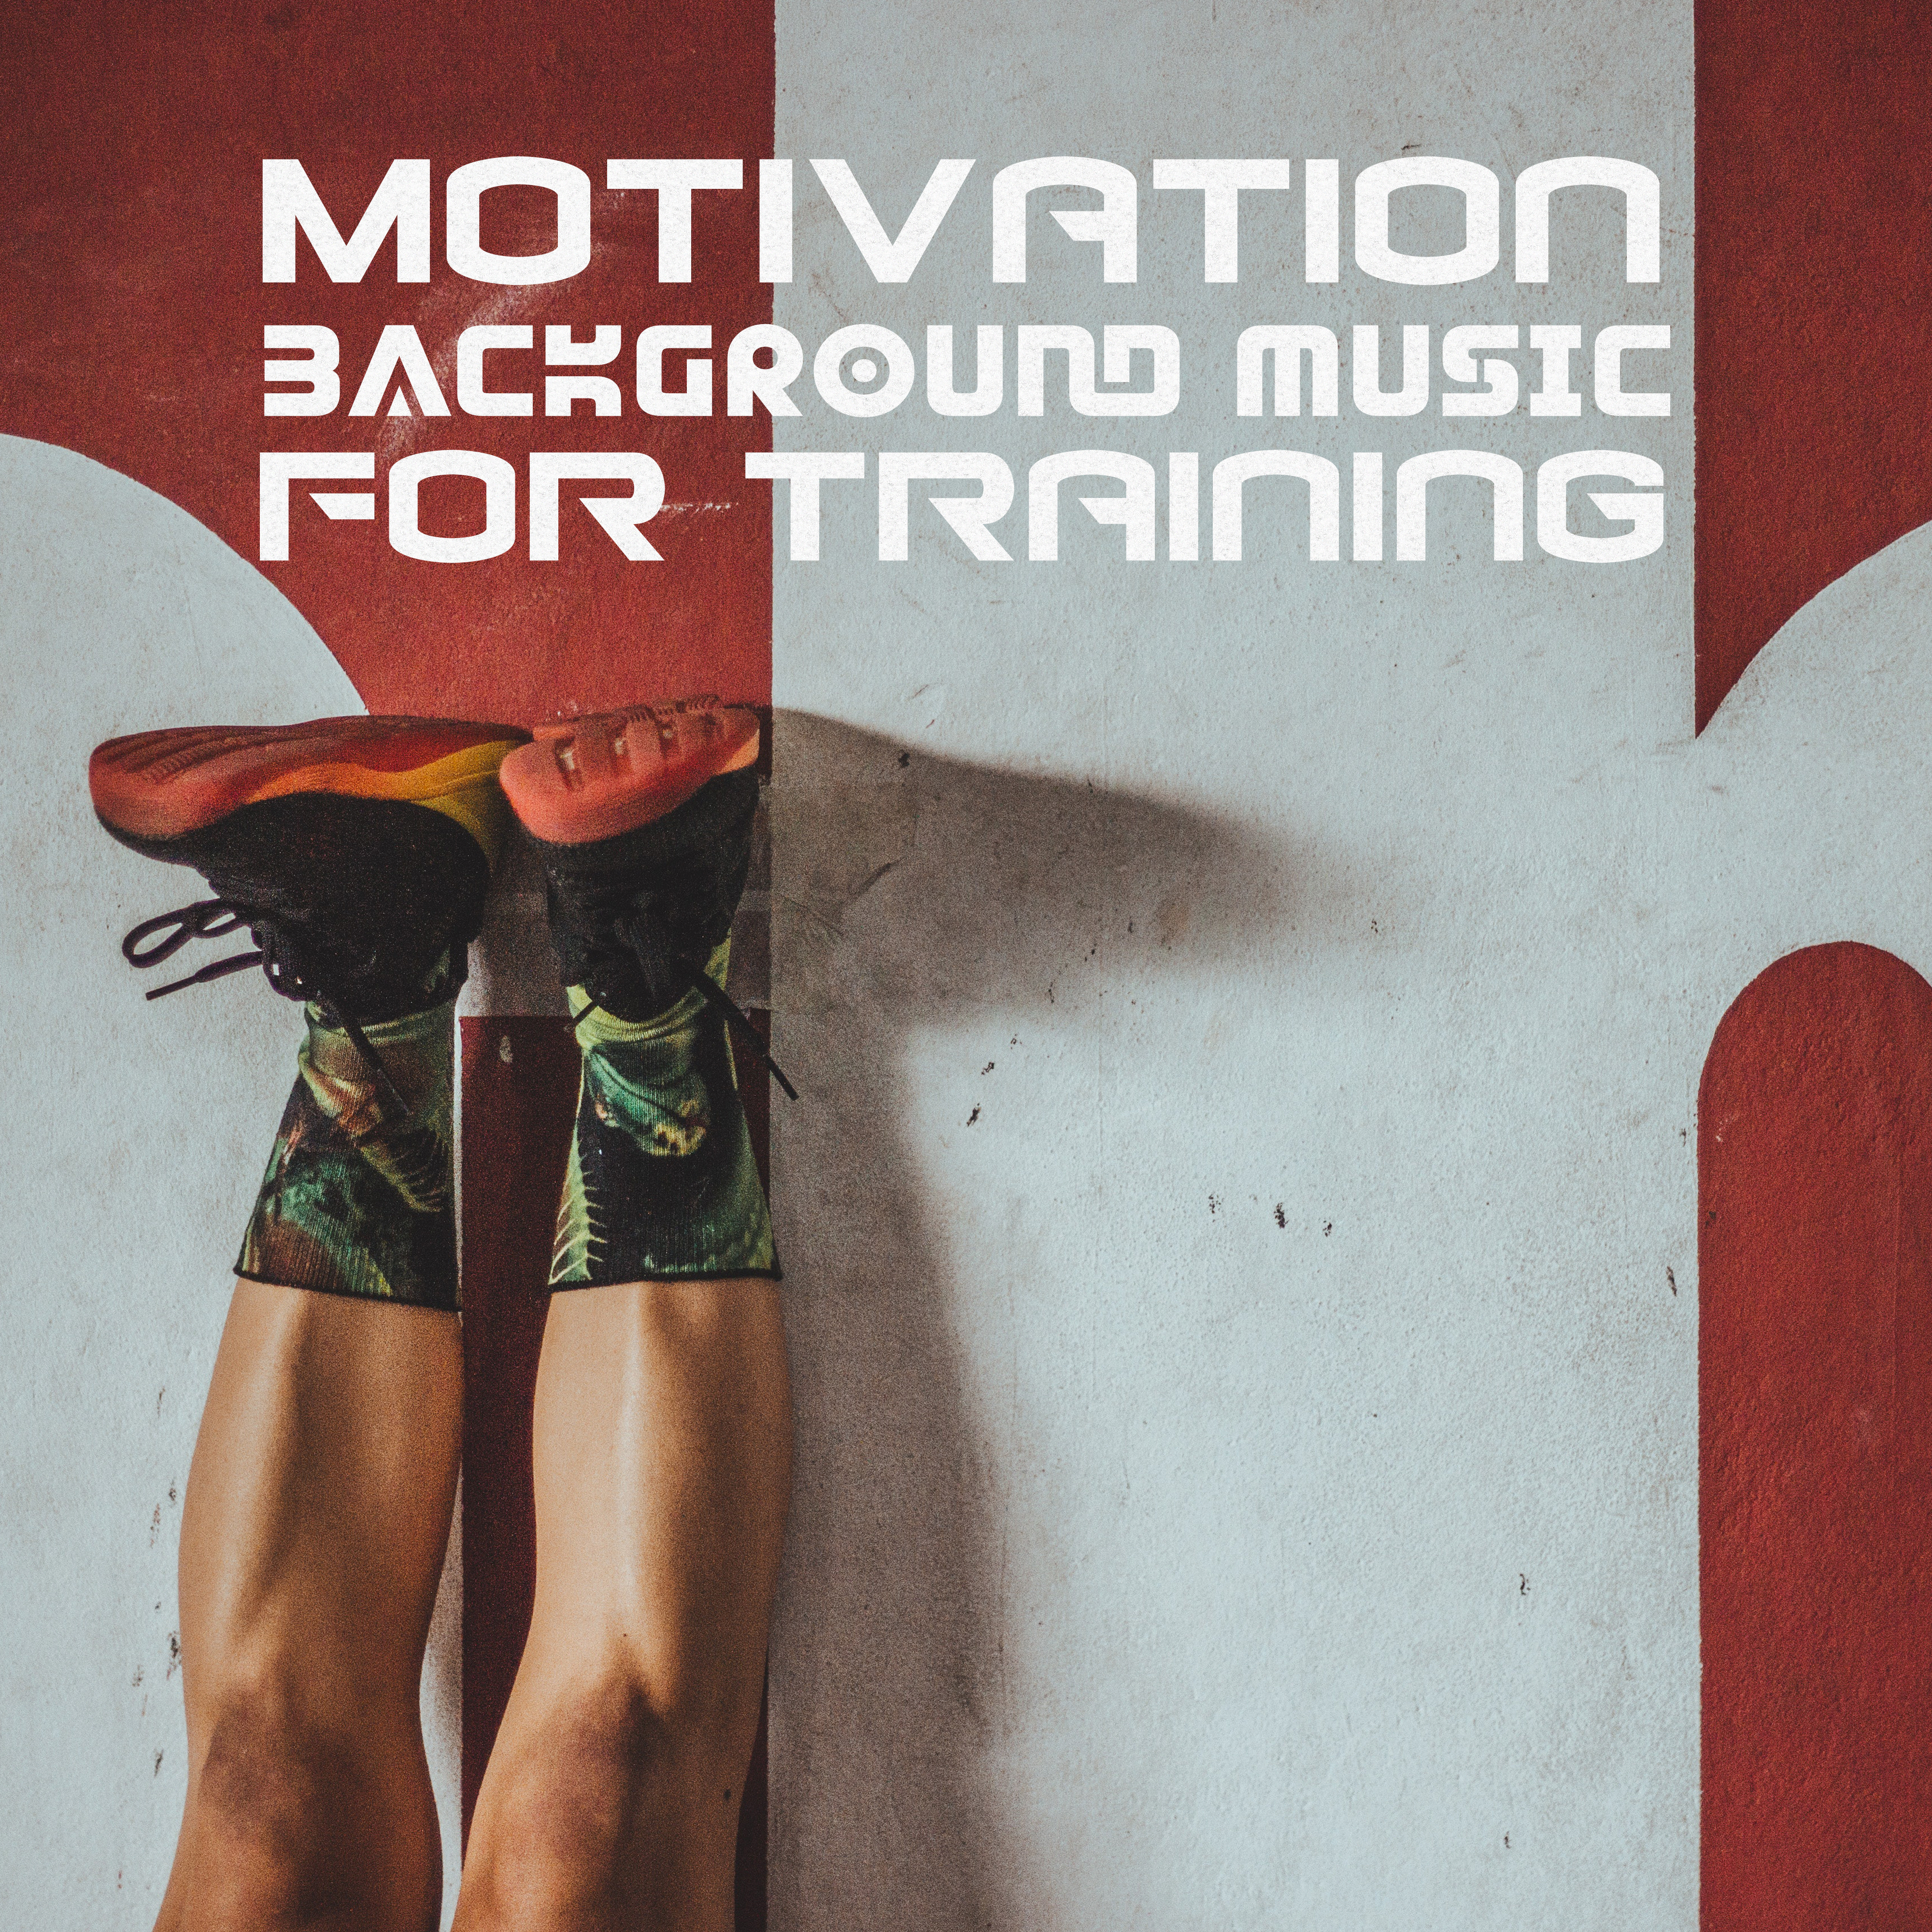 Motivation Background Music for Training